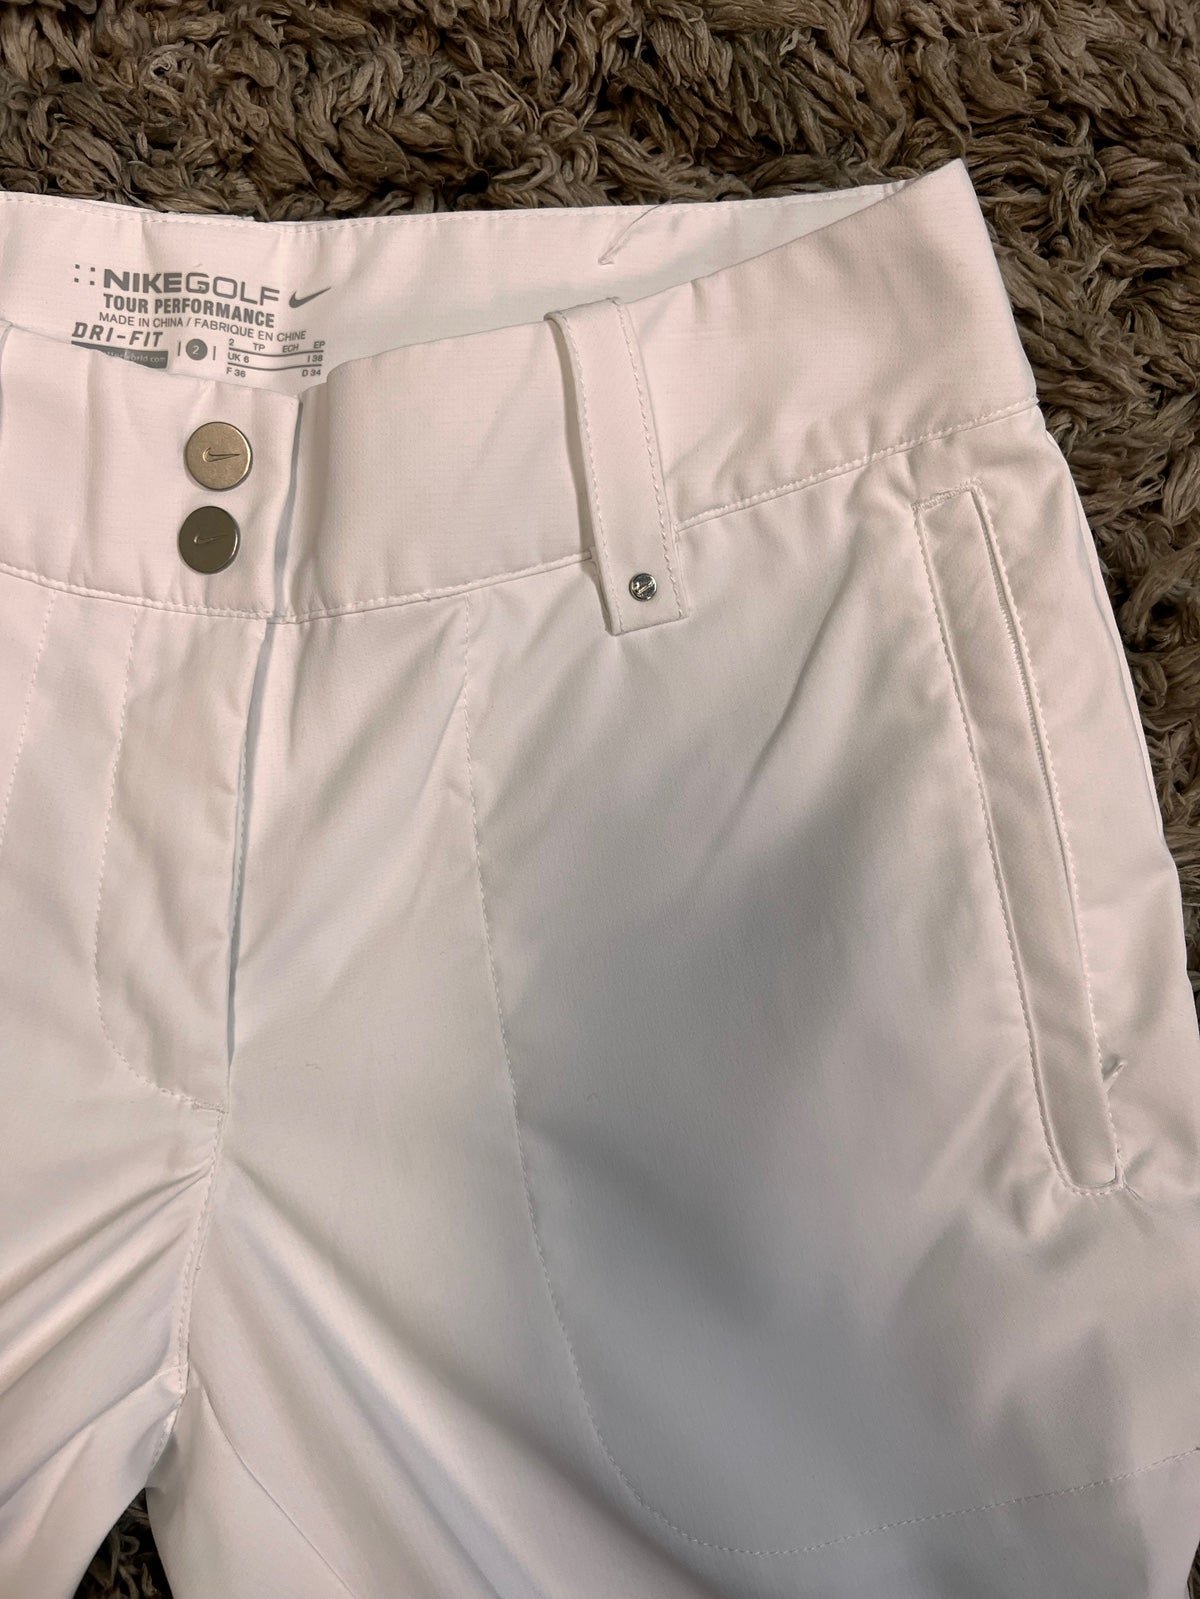 Gorgeous Nike Golf Tour Performance Dri-Fit Pants Women´s Size 2 White Active Flat Front HSNABQgRa Discount